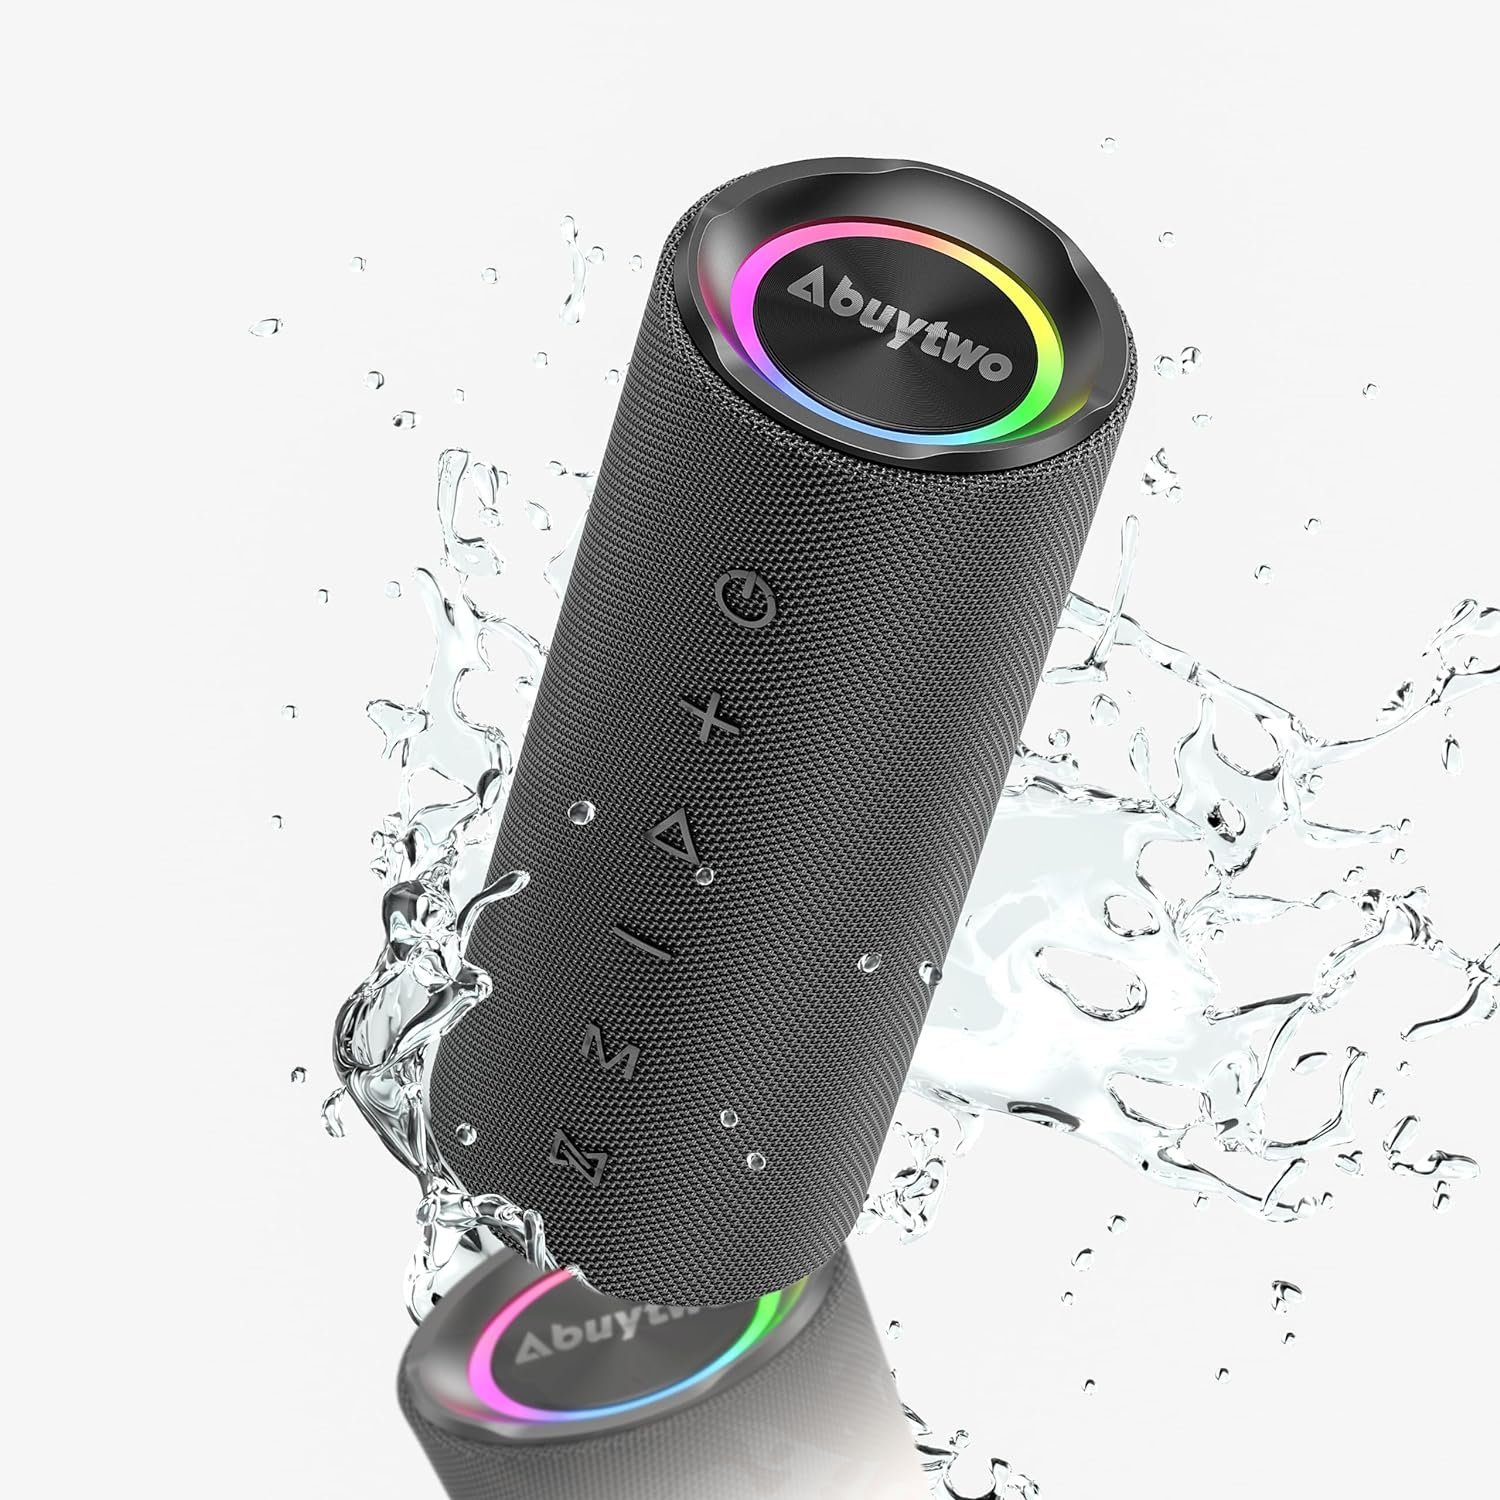 Abuytwo Stereo Wireless Lautsprecher (Bluetooth, Musikbox Bluetooth Lautsprecher - IPX7 Wasserdicht Tragbarer Mit Led)